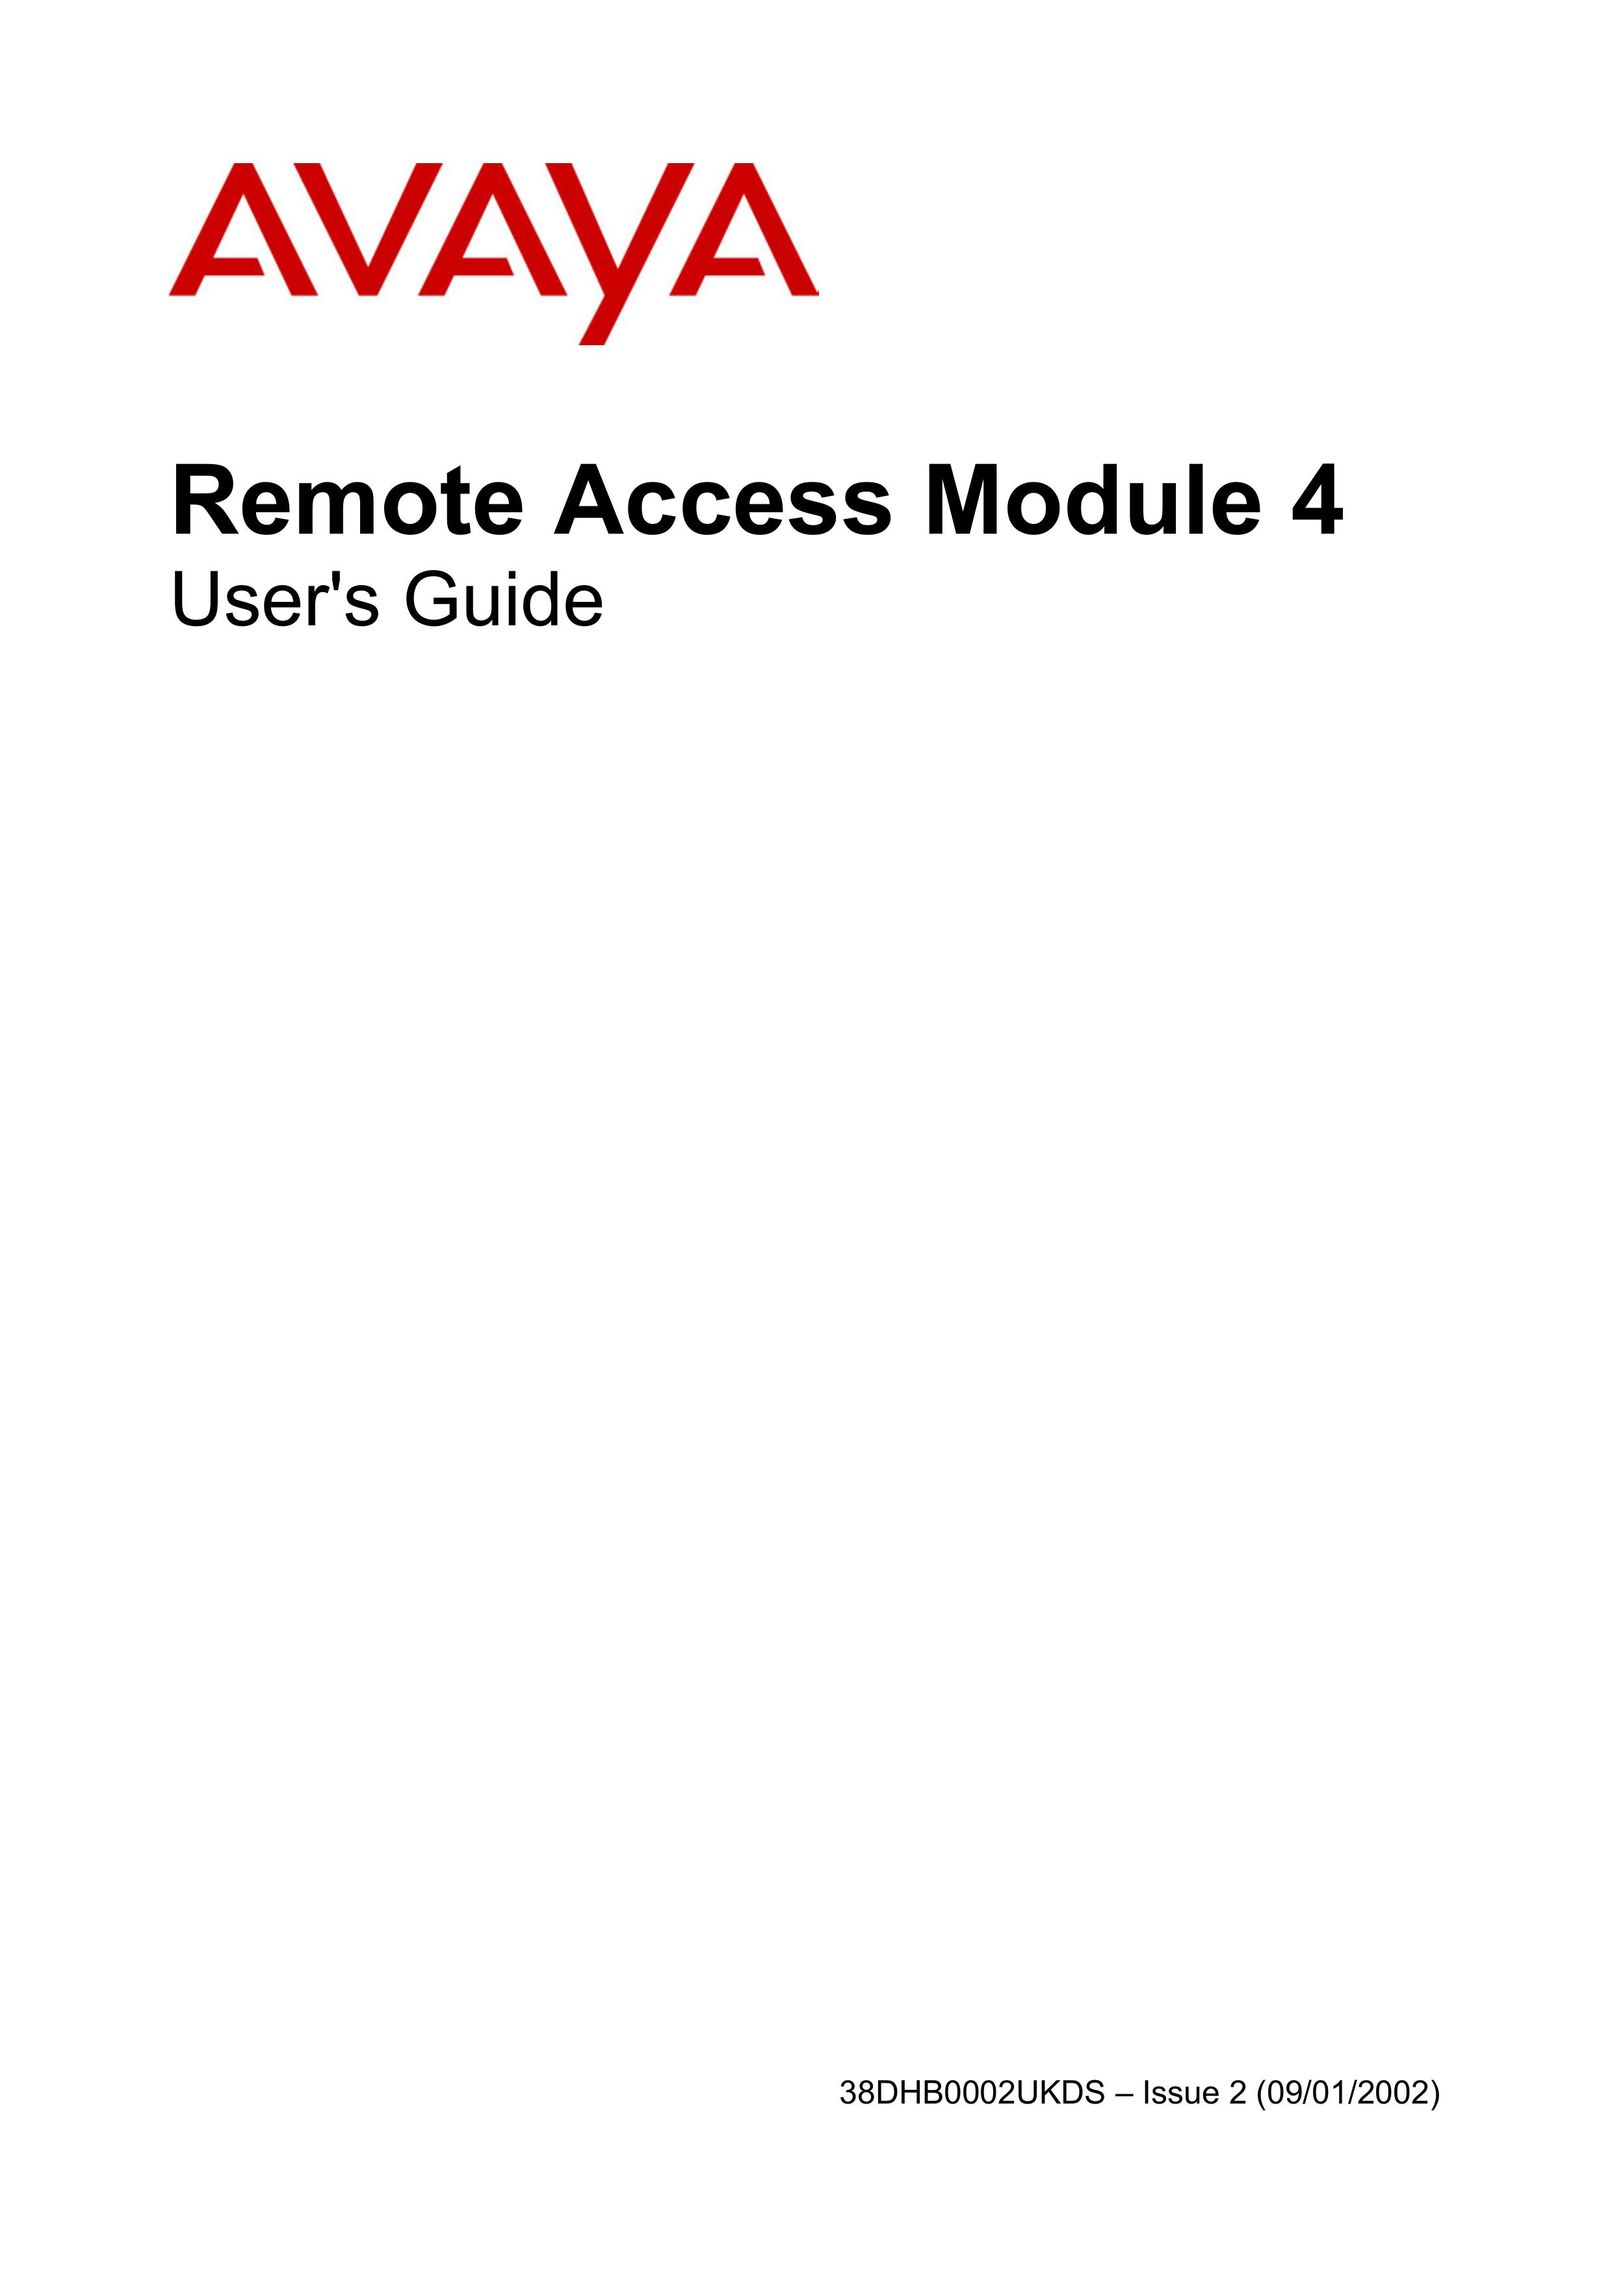 Avaya Remote Access Module 4 Network Card User Manual